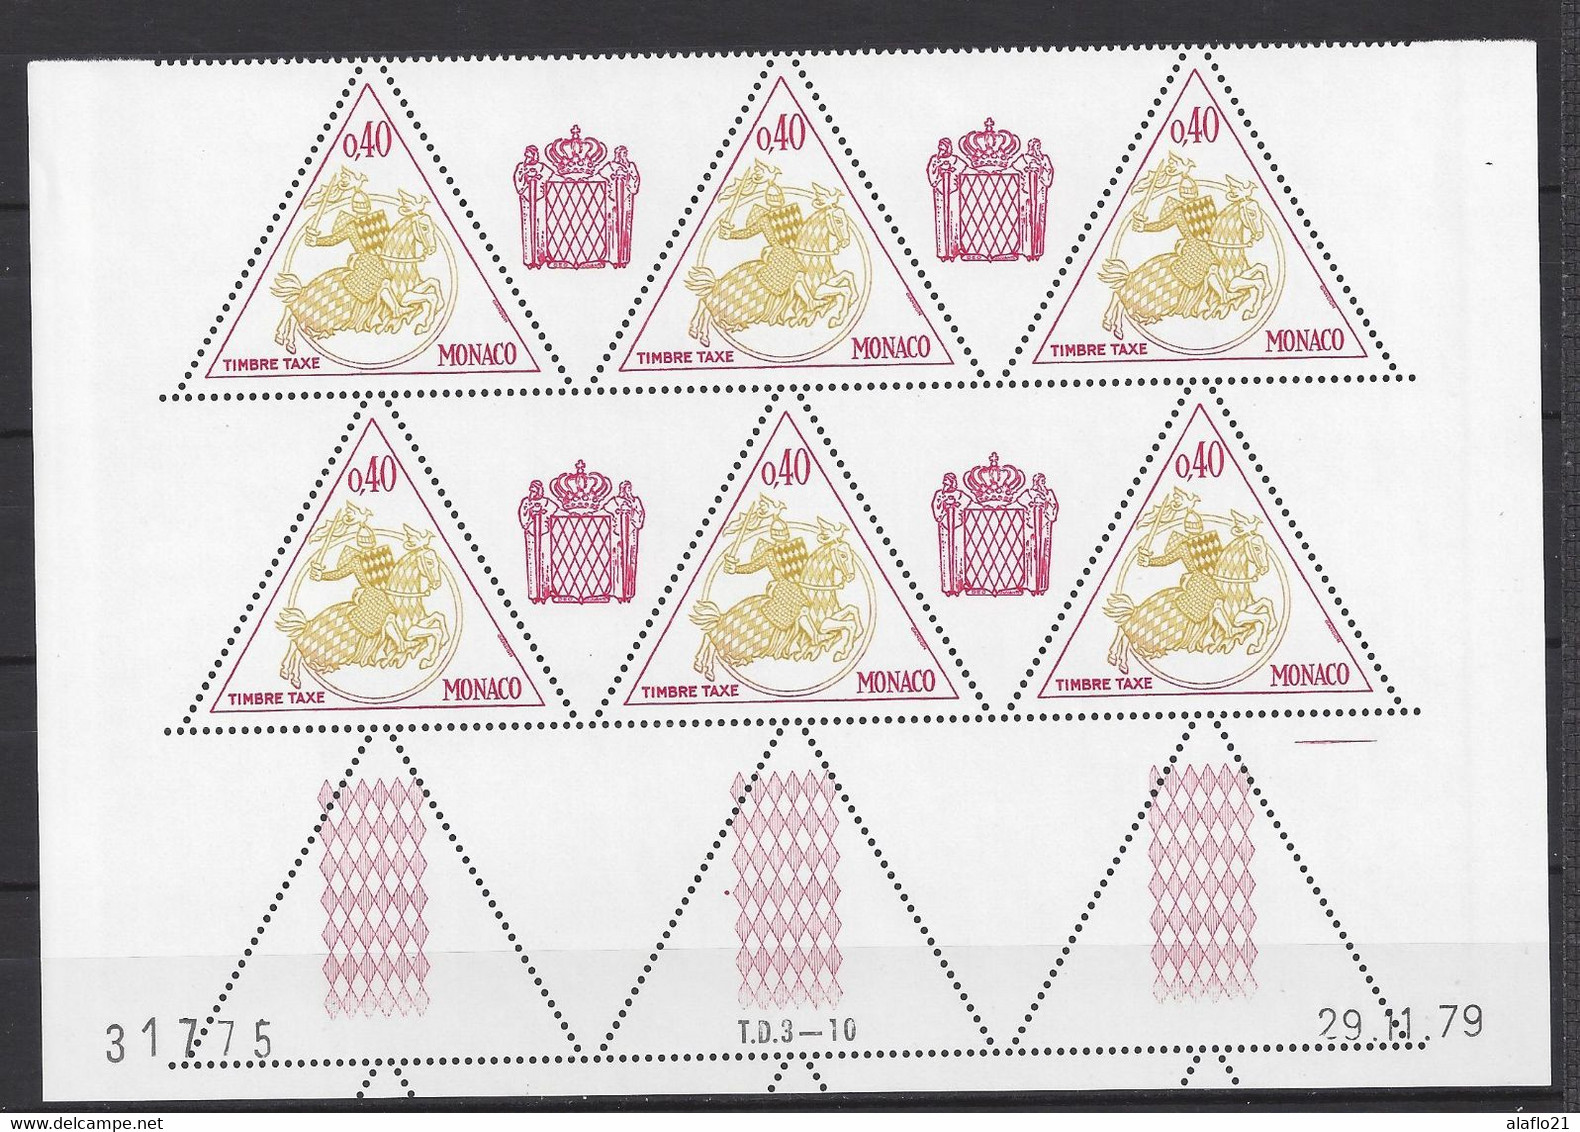 MONACO - TAXE N° 68 - SCEAU PRINCIER - Bloc De 6 COIN DATE - NEUF SANS CHARNIERE - 29/11/79 - Portomarken